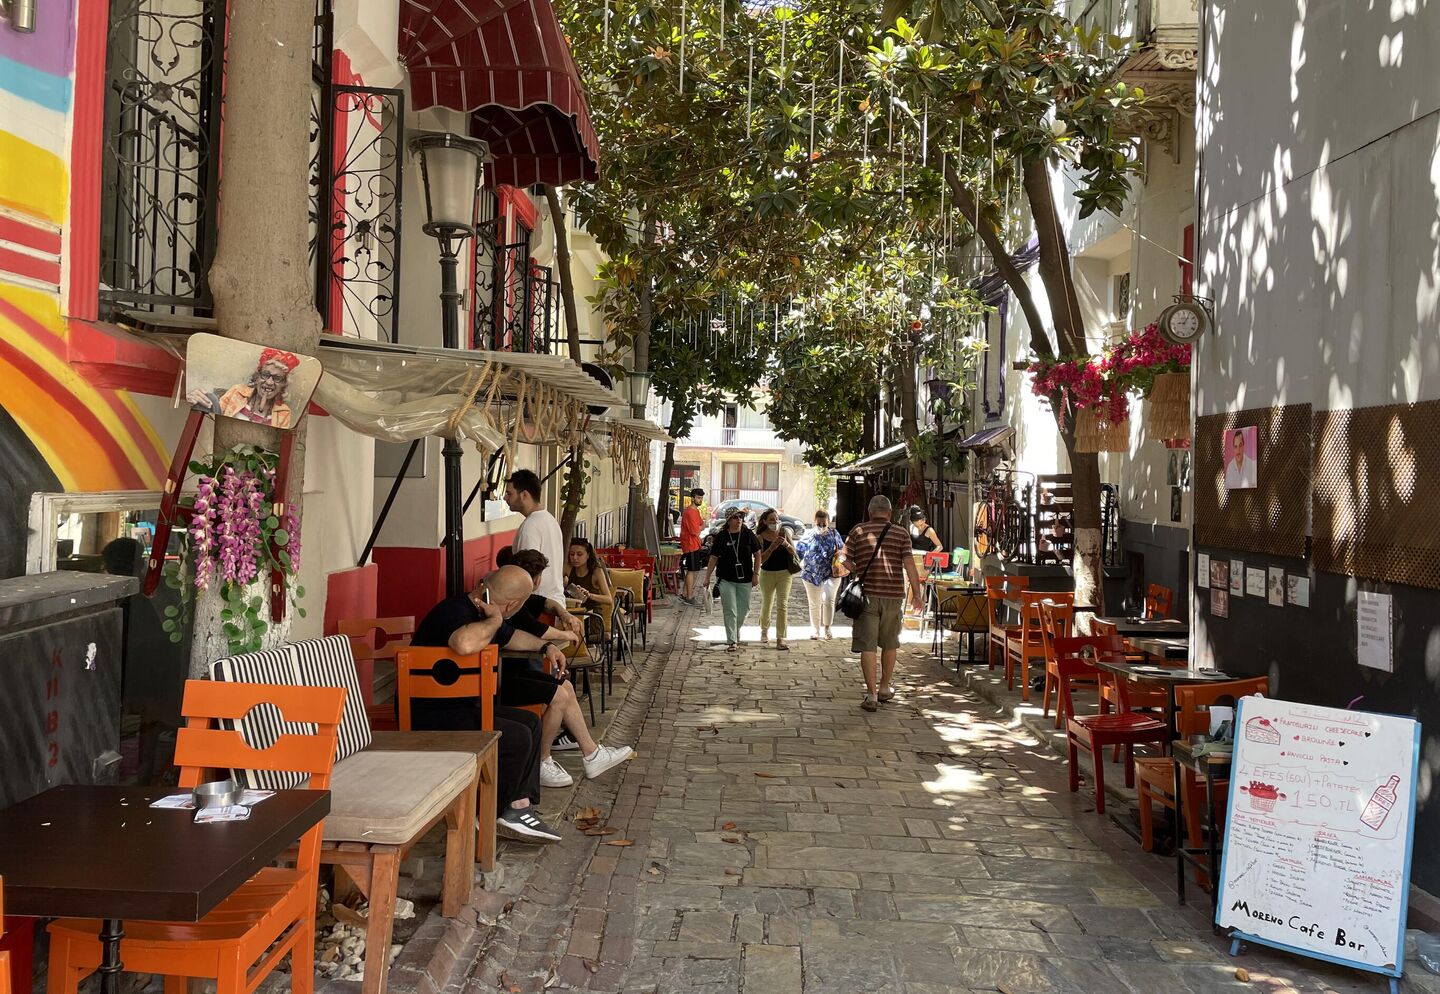 Улица с кафе в Измире